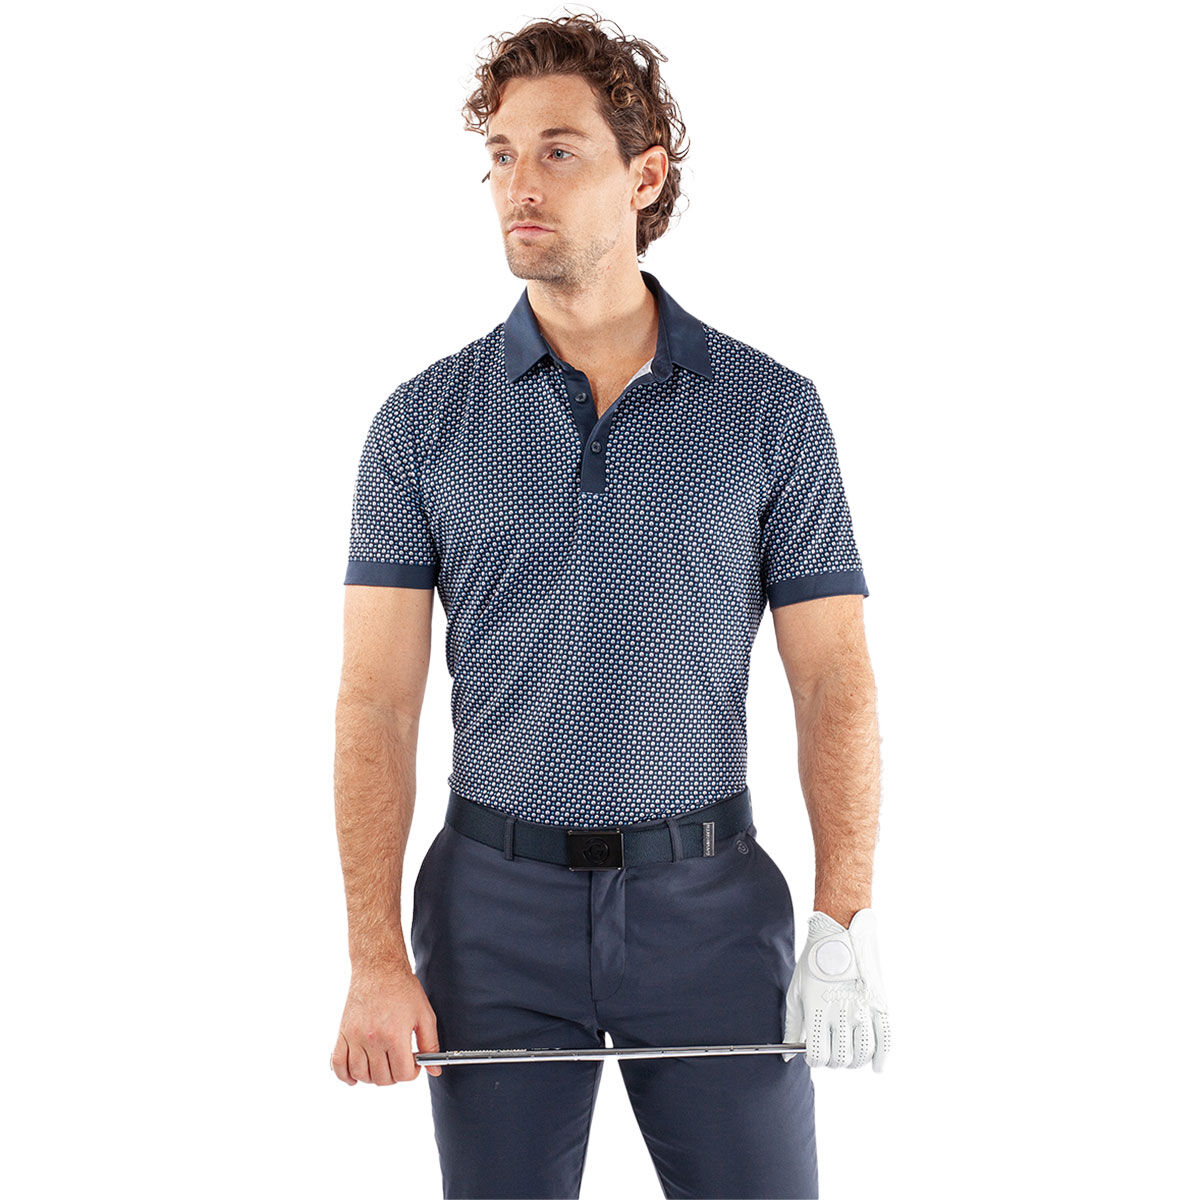 Galvin Green Men’s Mate Golf Polo Shirt, Mens, Cool grey/navy, Medium | American Golf